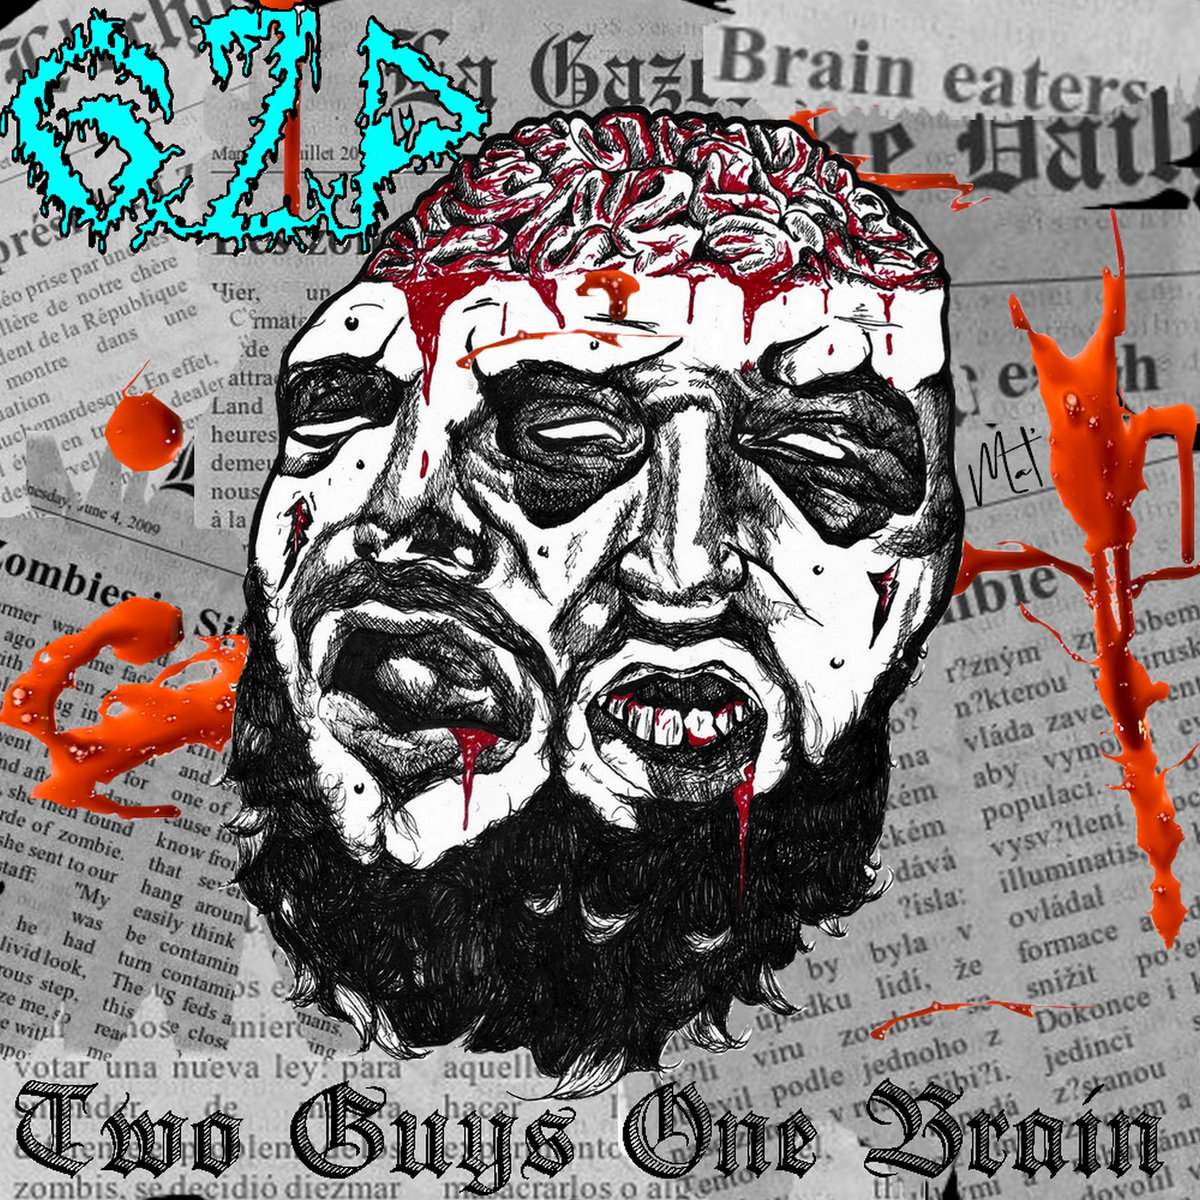 Brain g. One Brain. Akov — Apocalypse Brain Ep.